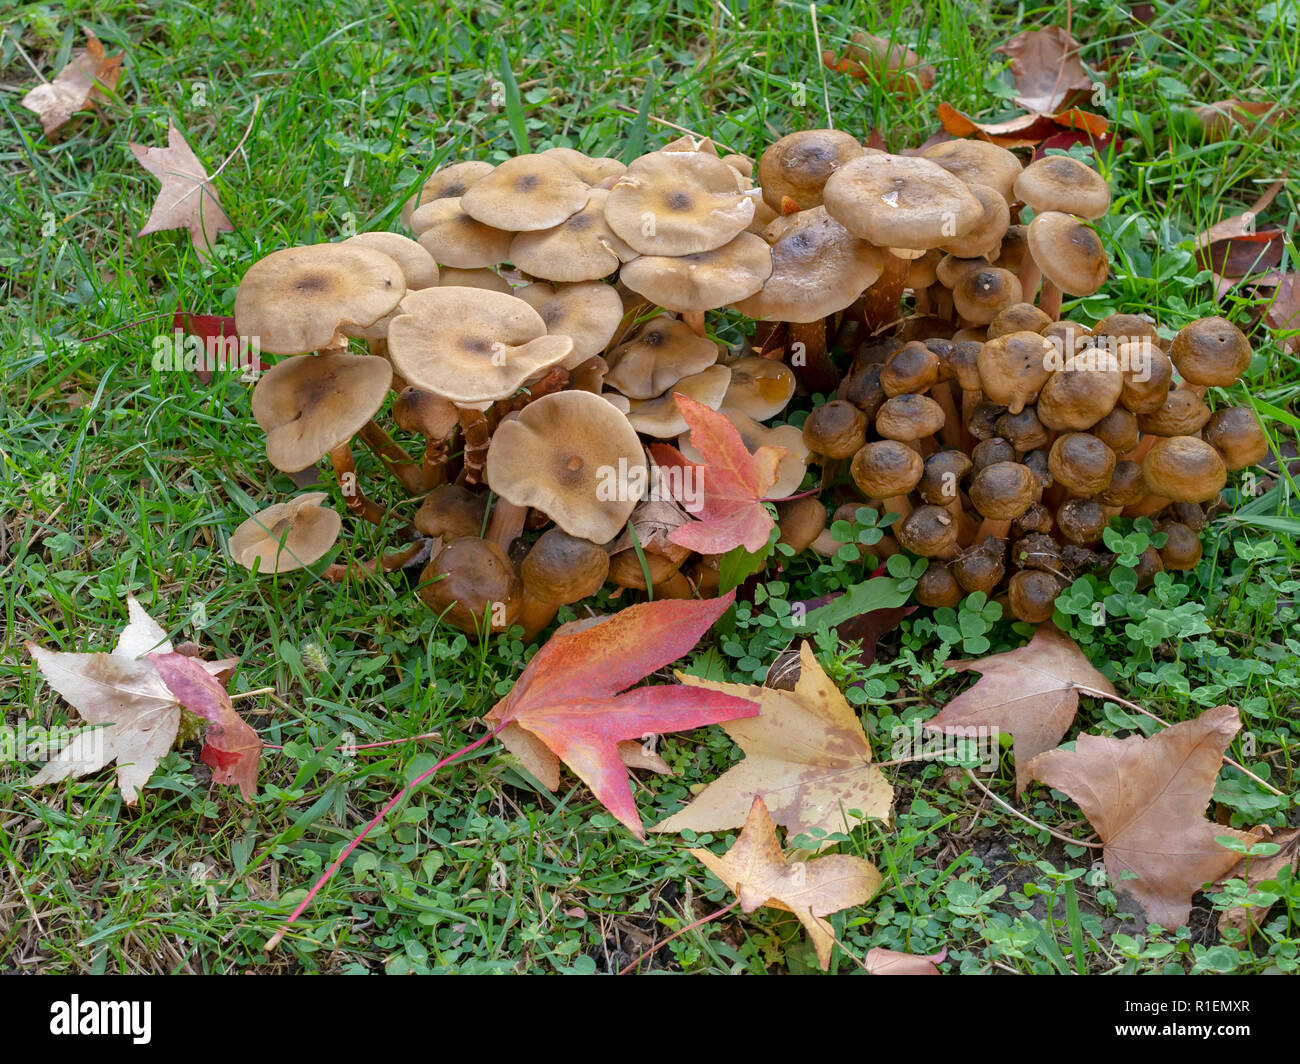 Armillaria mellea. Close up of wild Honey fungus mushrooms with autumn leaves in grass. Bioluminscent edible mushroom. Stock Photo